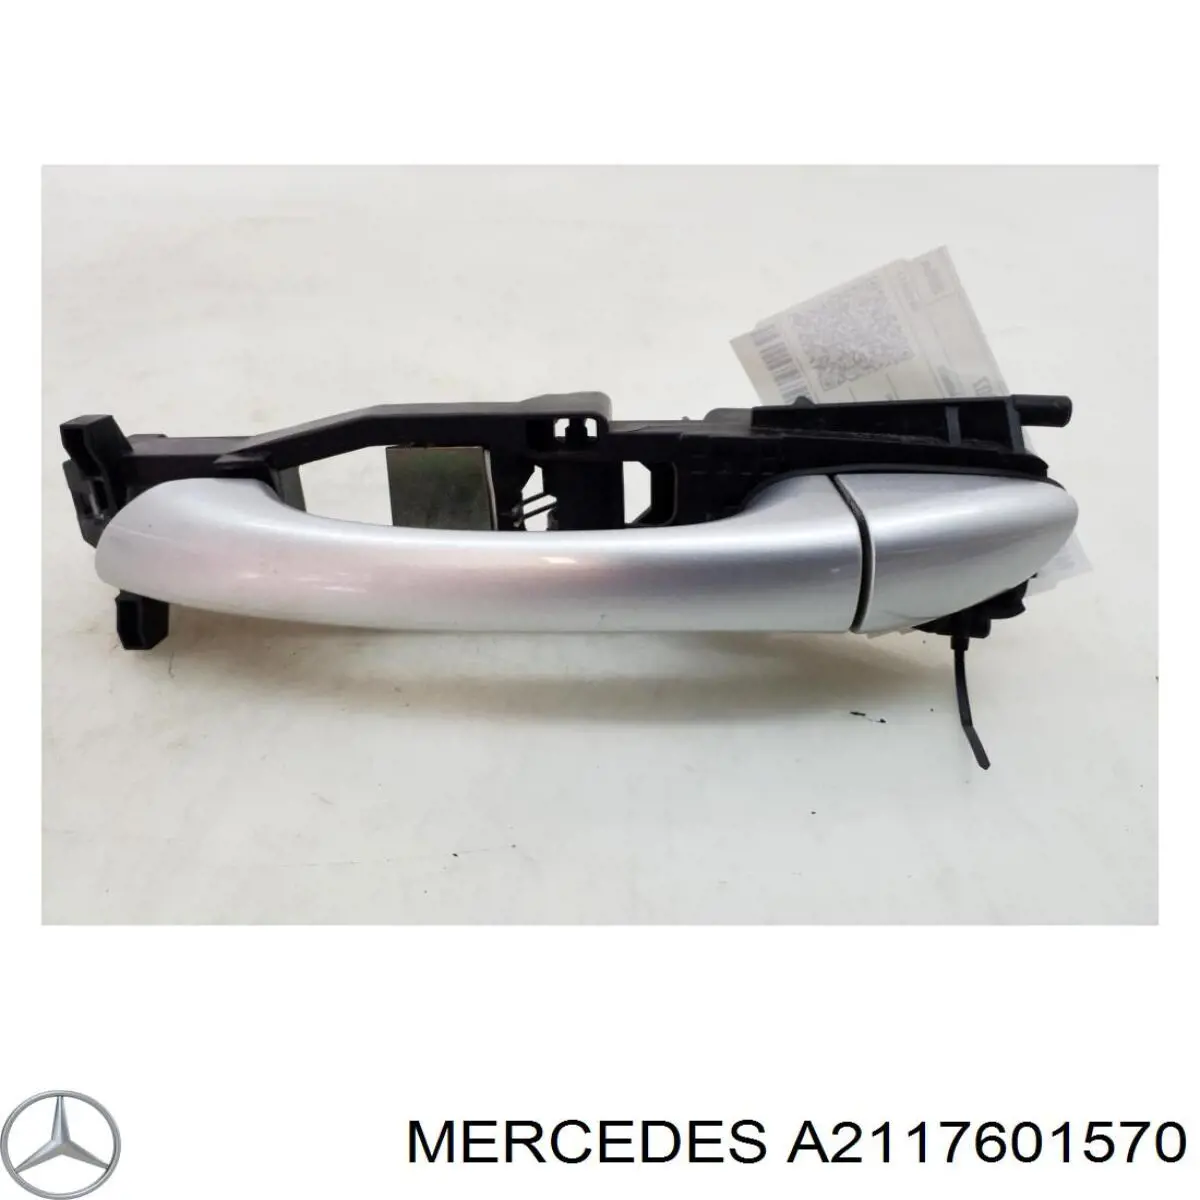 A2117601570 Mercedes maçaneta dianteira esquerda externa da porta